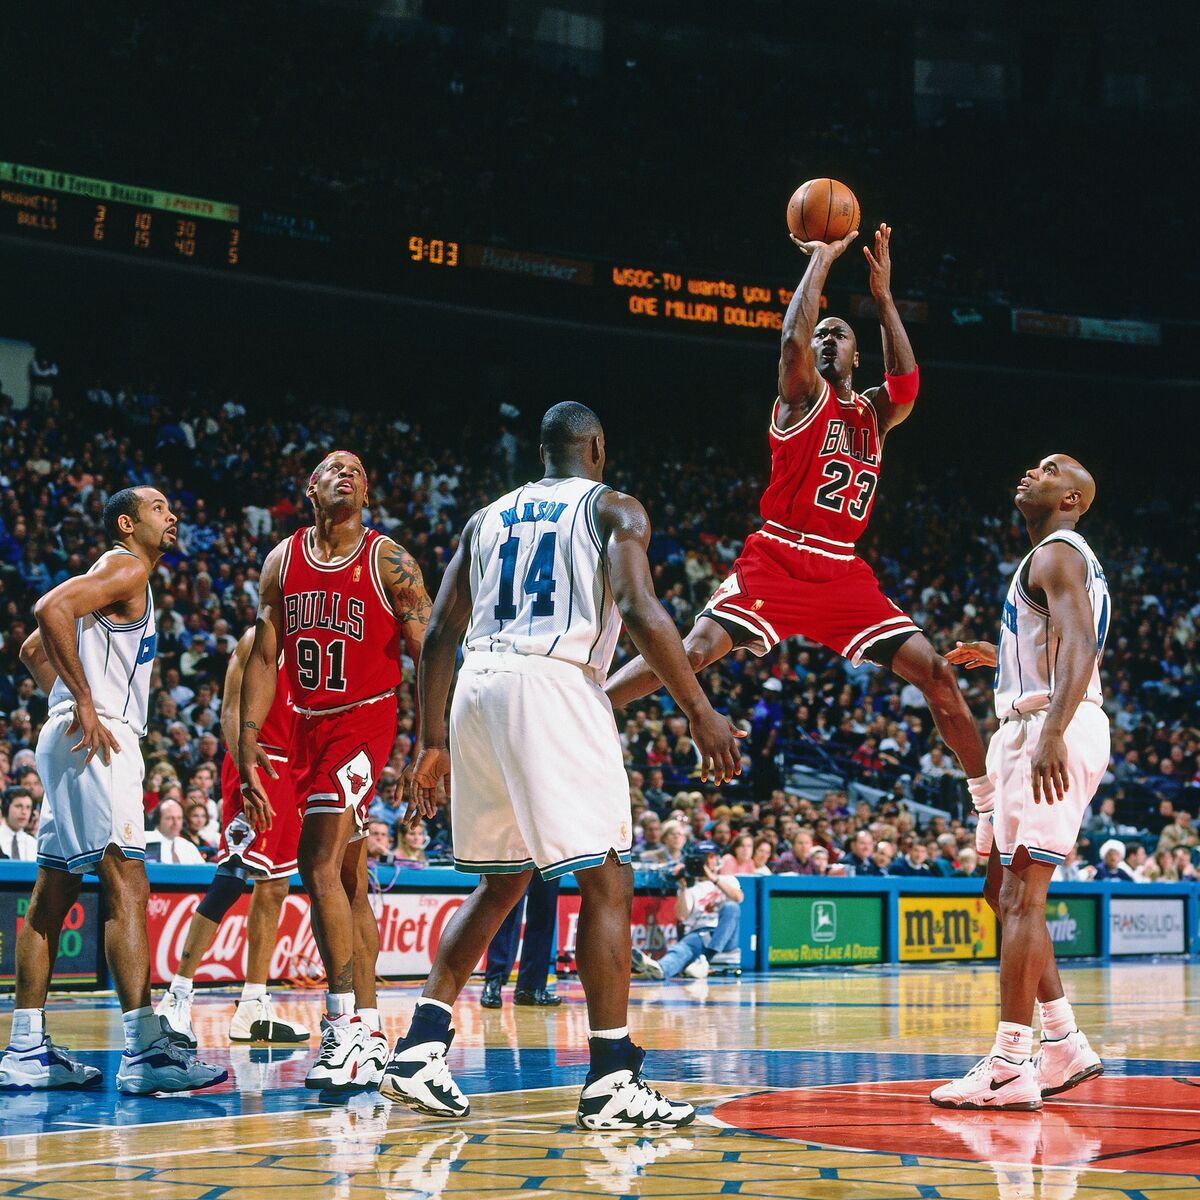 Odorless Sequel excess The Last Dance ESPN Time: Michael Jordan Documentary at 9 p.m. ET -  Bloomberg